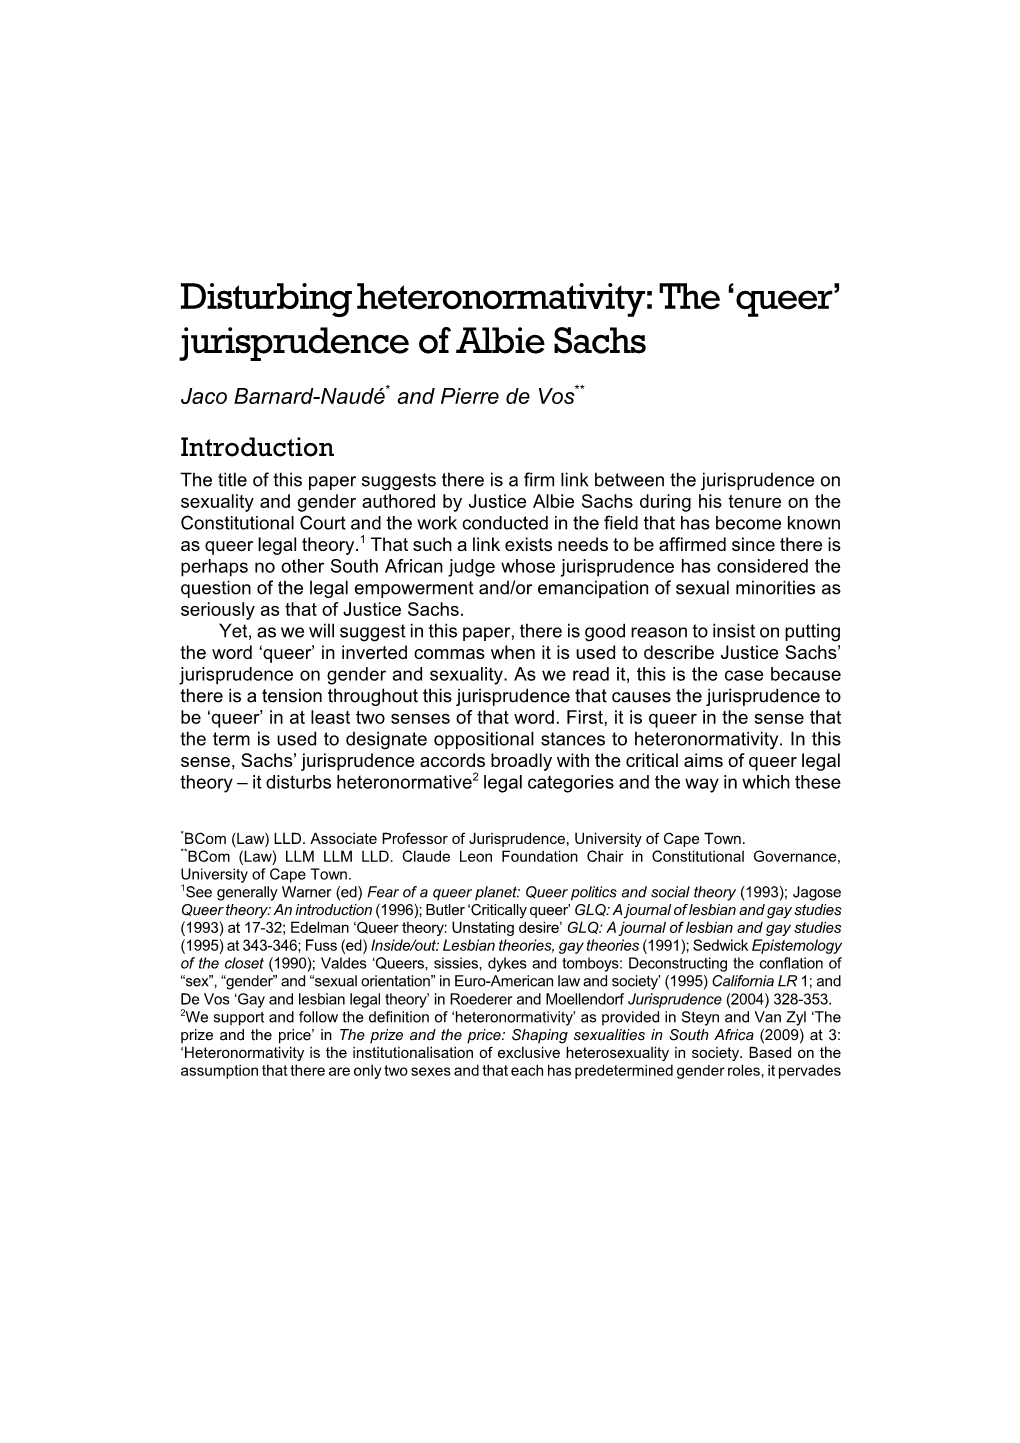 Disturbing Heteronormativity: the 'Queer'